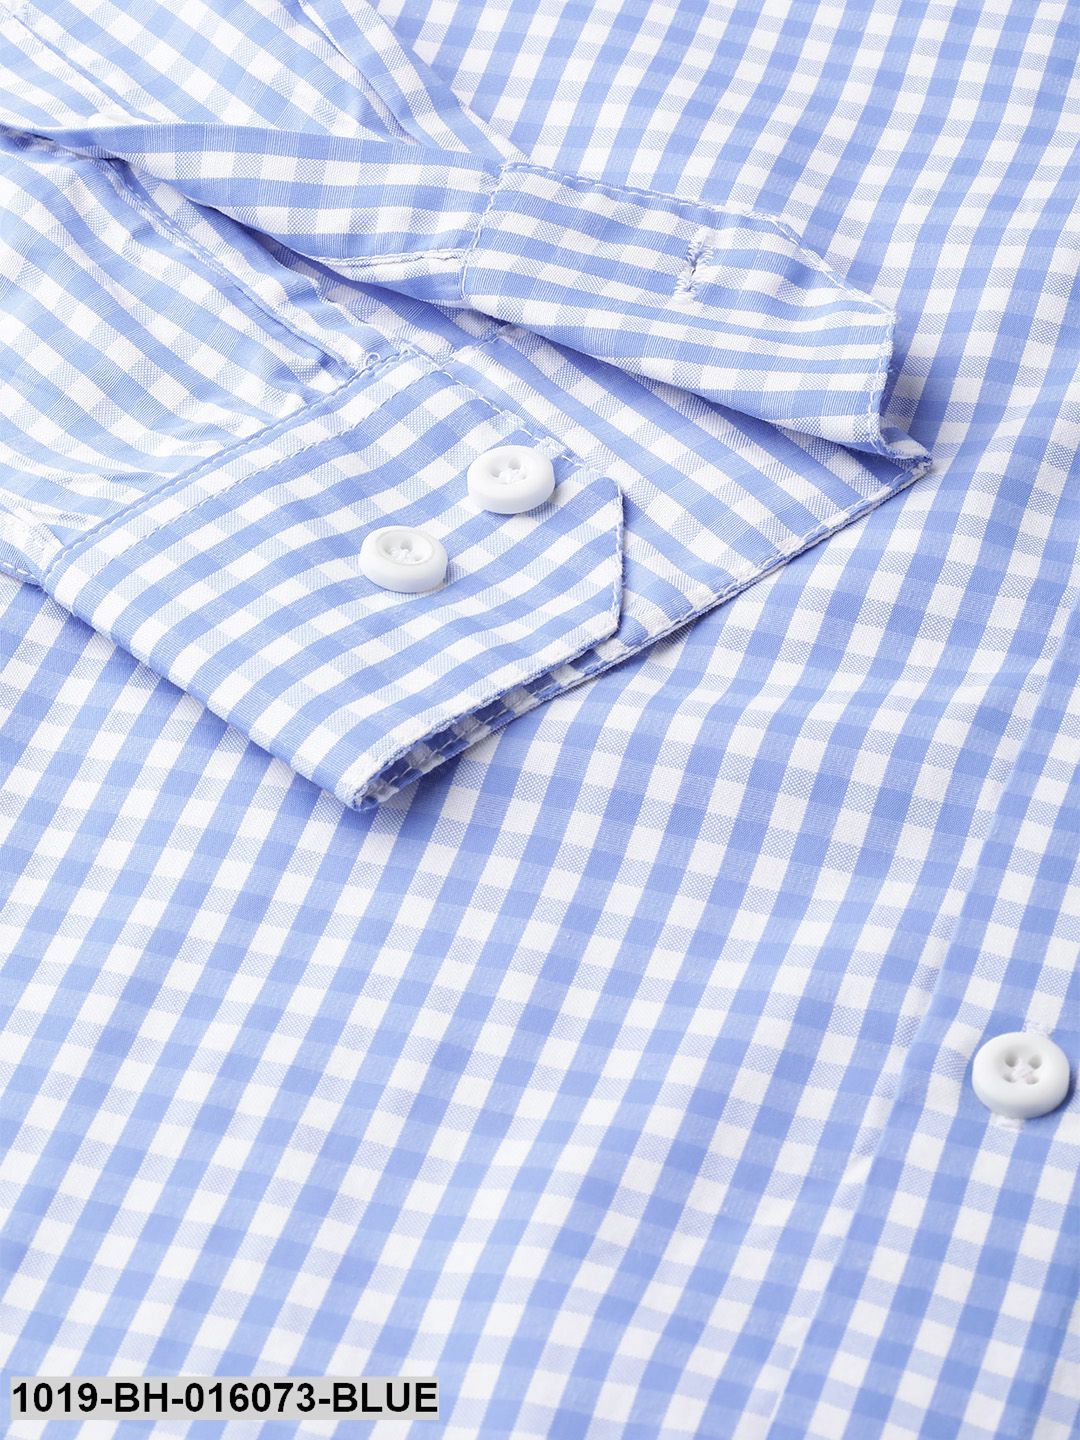 Men's Cotton Blue & White Checked Casual Shirt - Sojanya